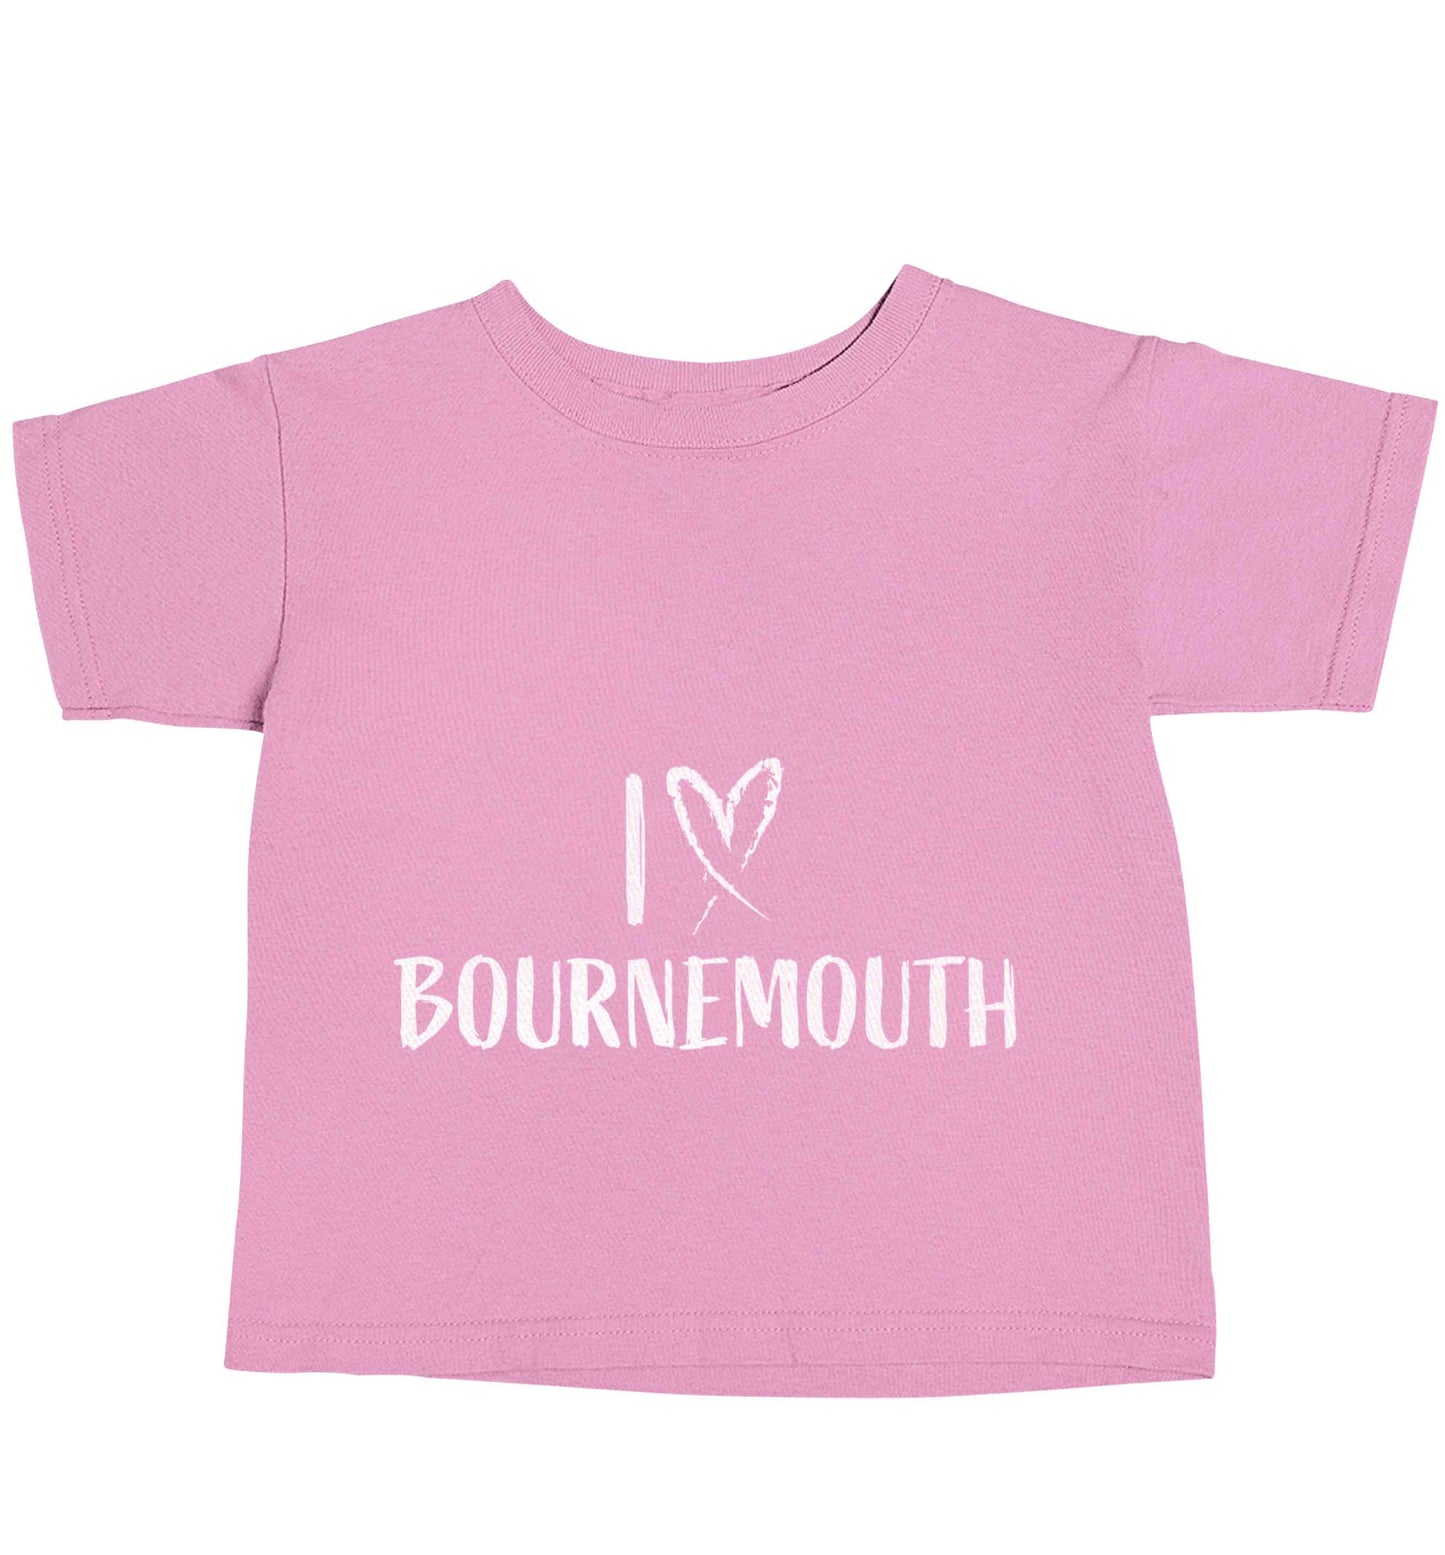 I love Bournemouth light pink baby toddler Tshirt 2 Years